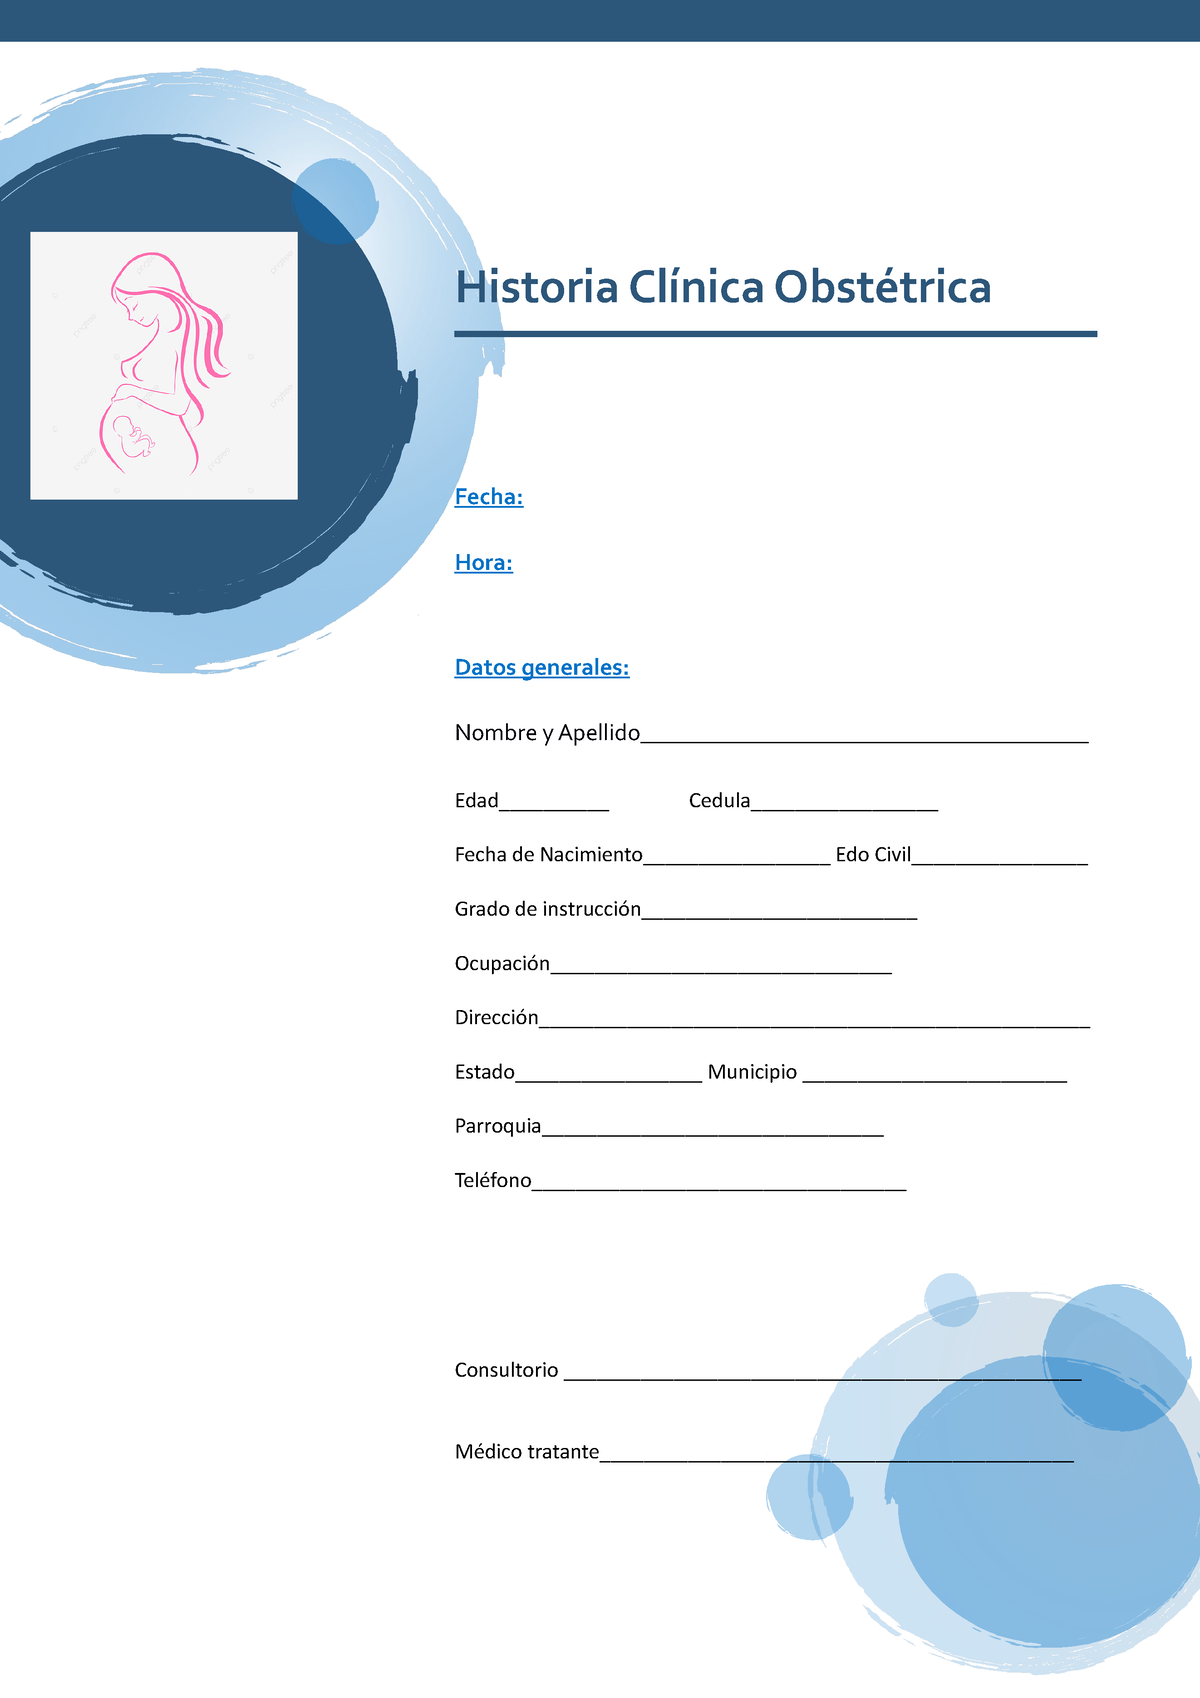 Historia Clínica Obstétrica 2023 Historia Clínica Obstétrica Fecha Hora Datos Generales 8706